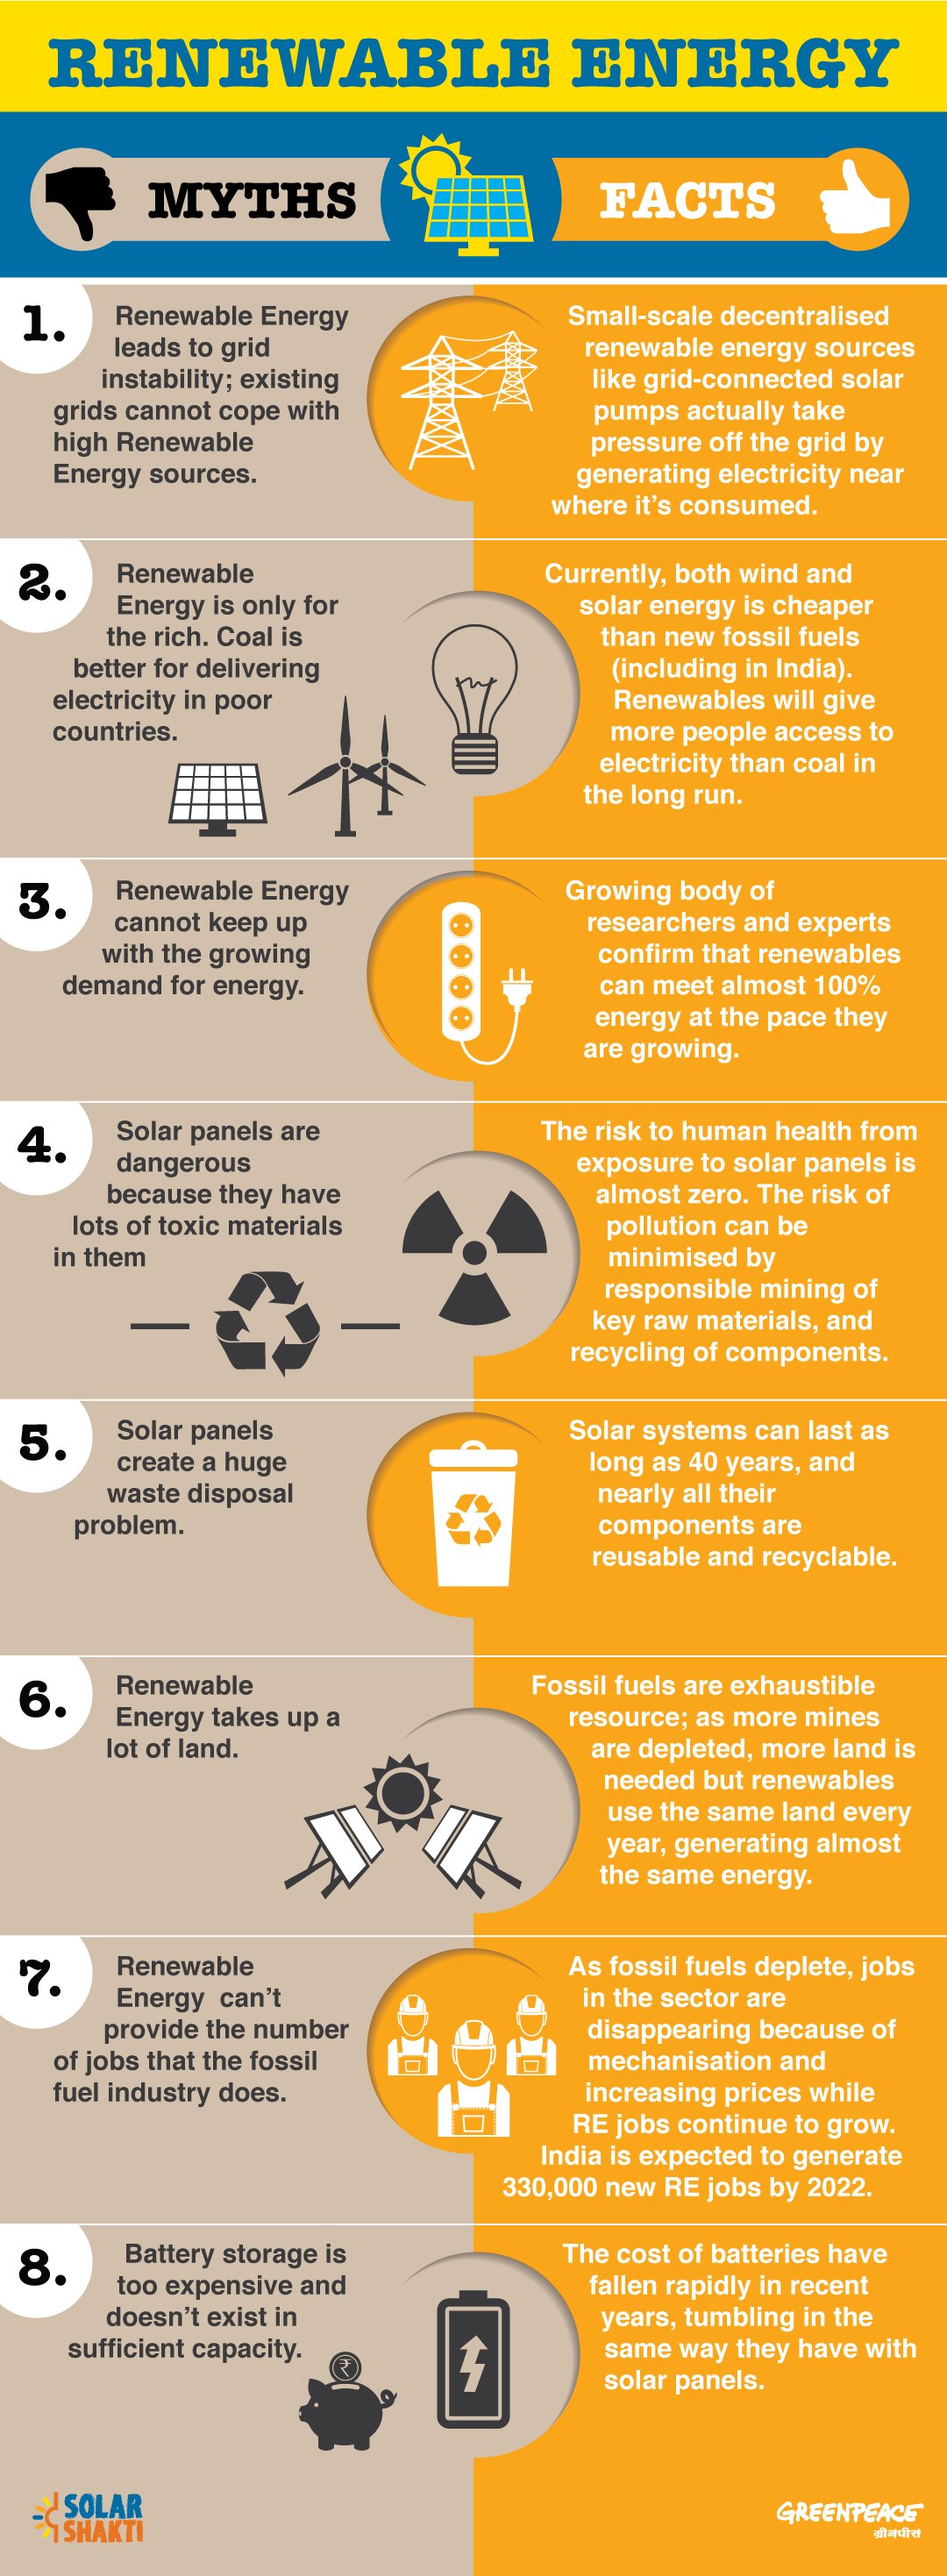 Breaking Renewable Energy myths - Greenpeace India